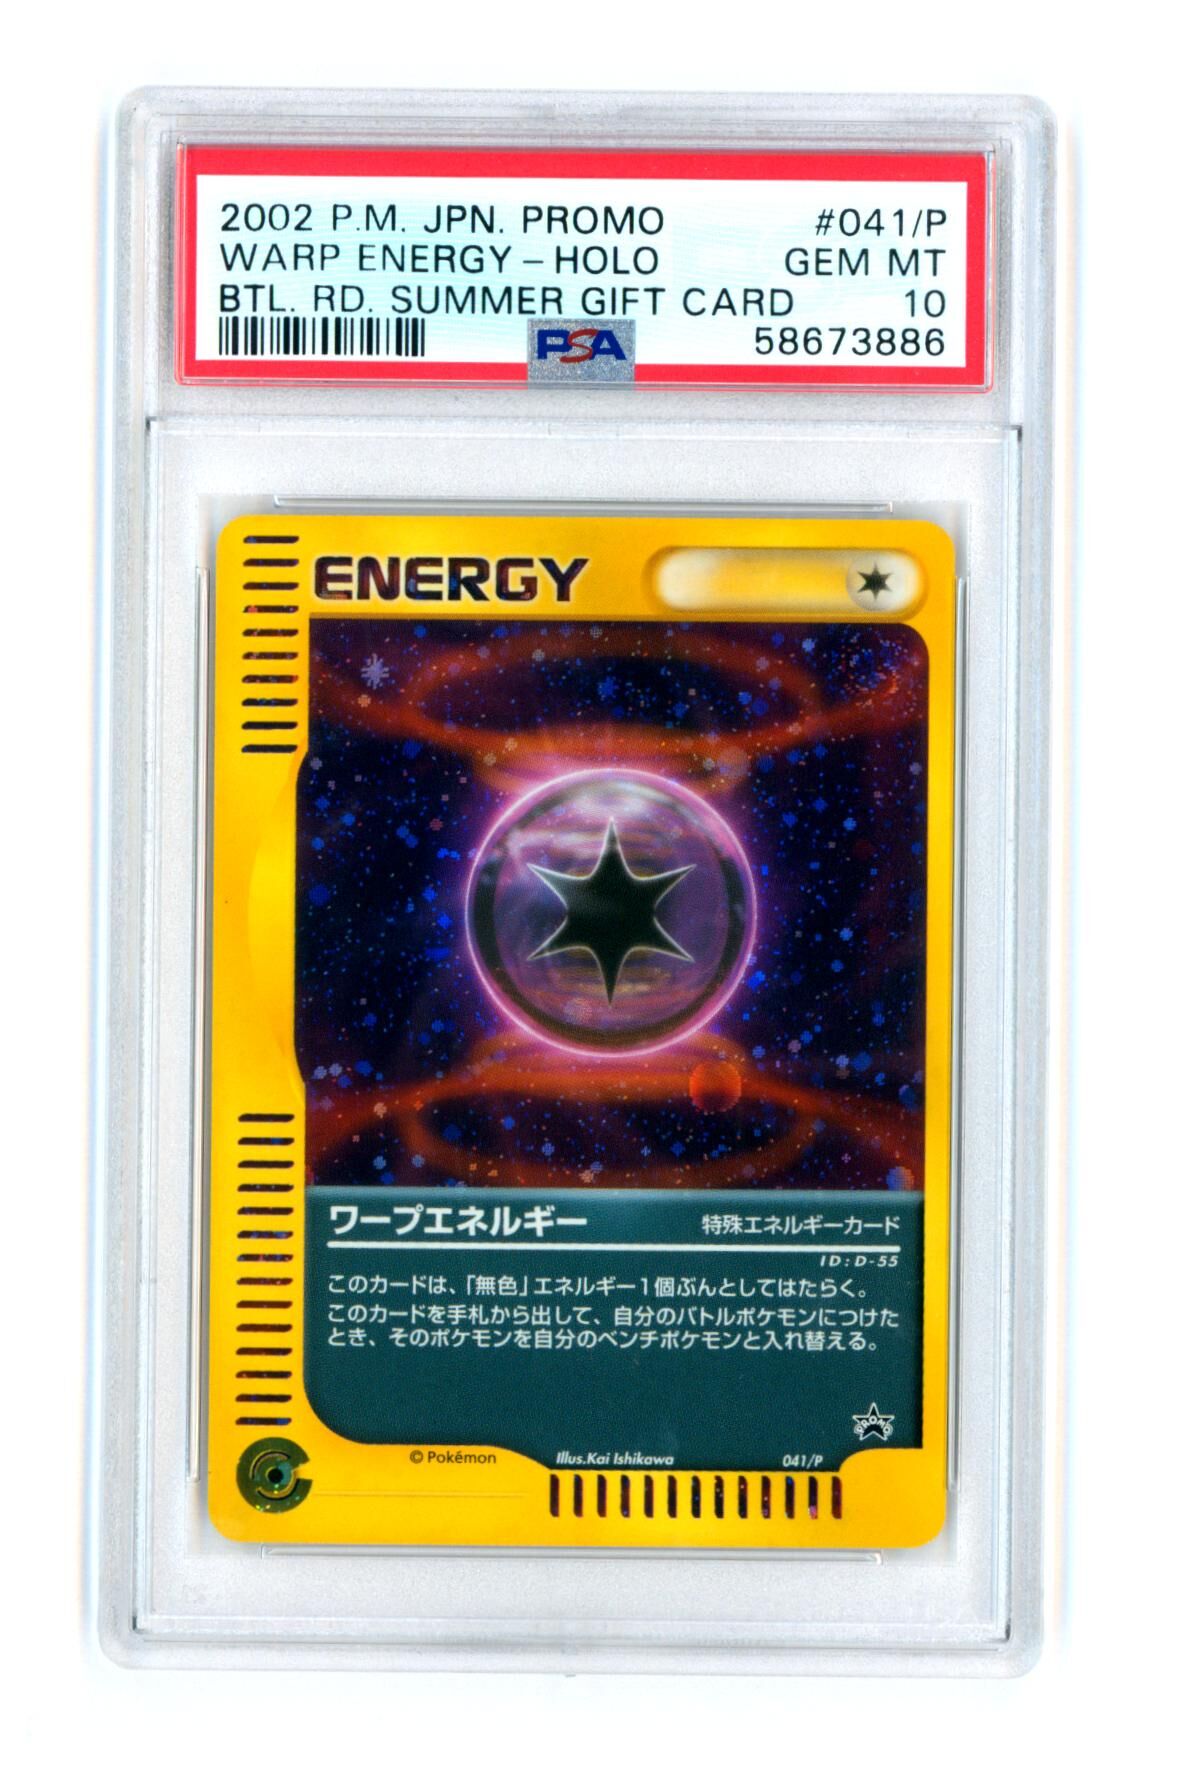 Warp Energy #041/P - BTL. RD. Summer Gift Card - Japanese Promo - Holo - PSA 10 GEM MT - Pokémon